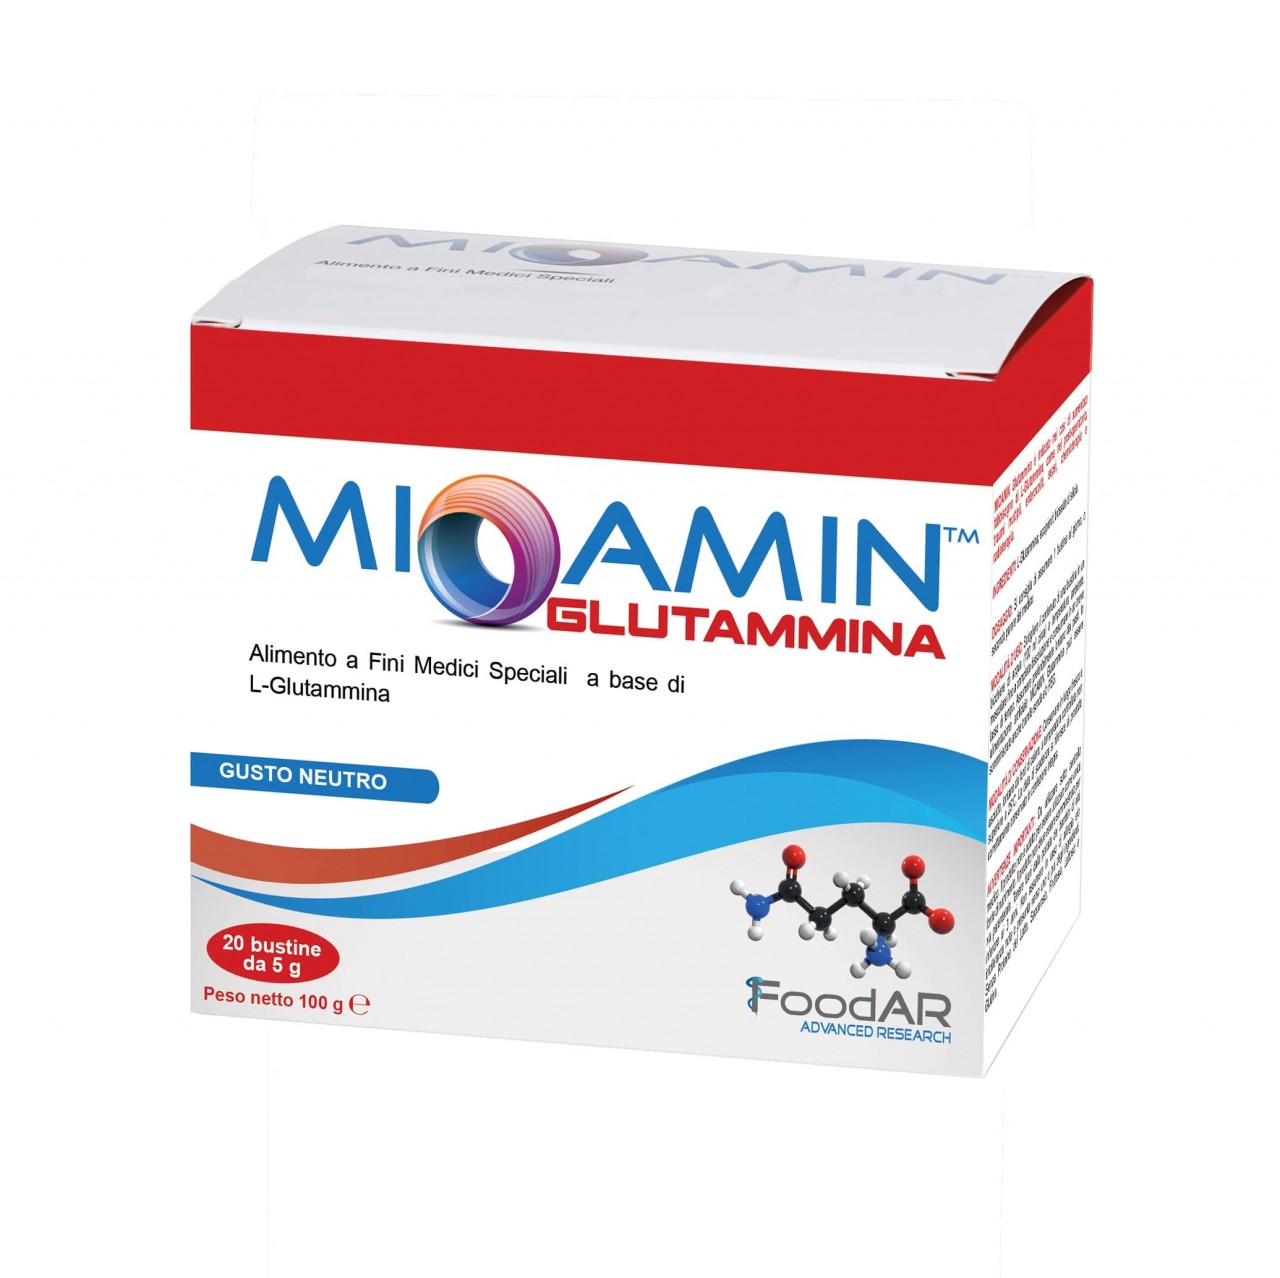 MioAmin Glutammina 20 bs x 5g